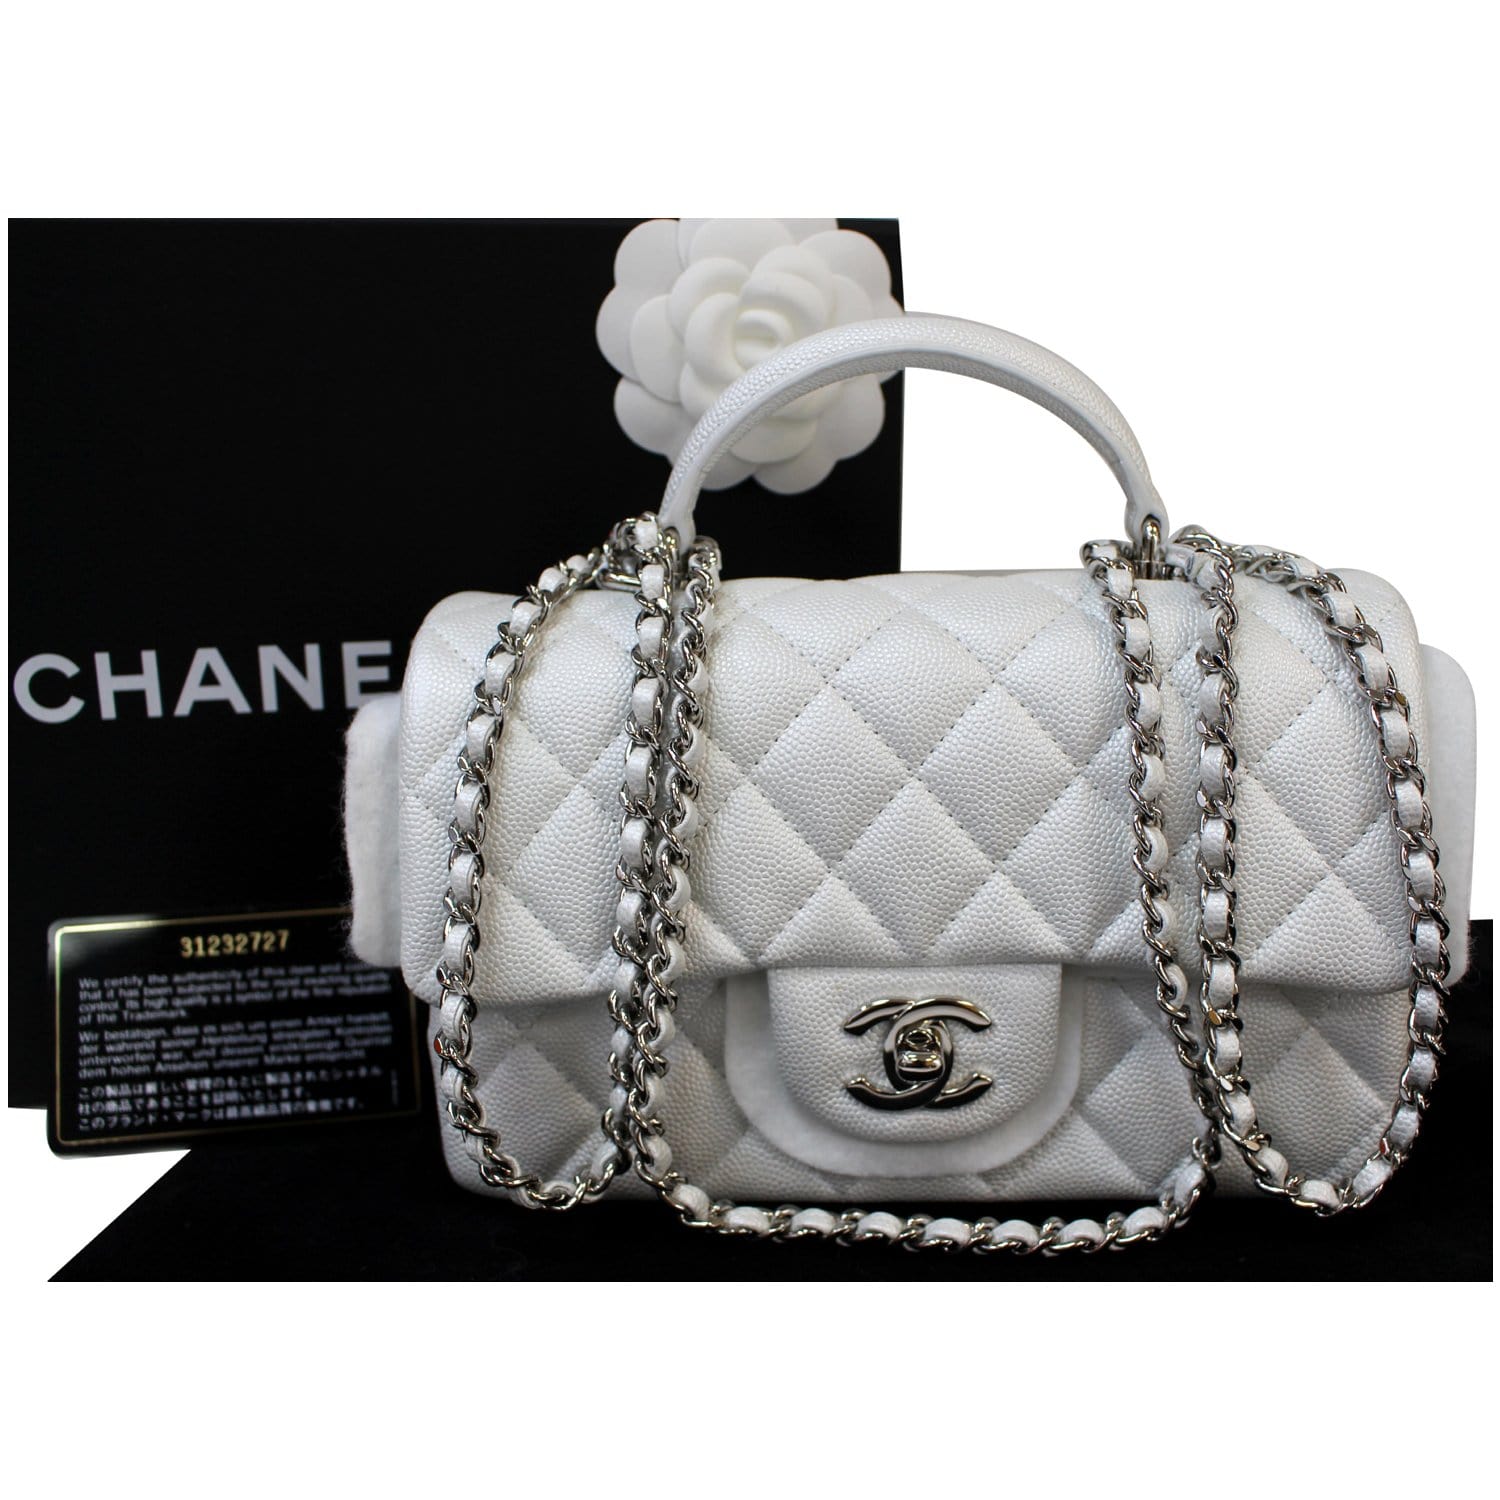 chanel classic bag white